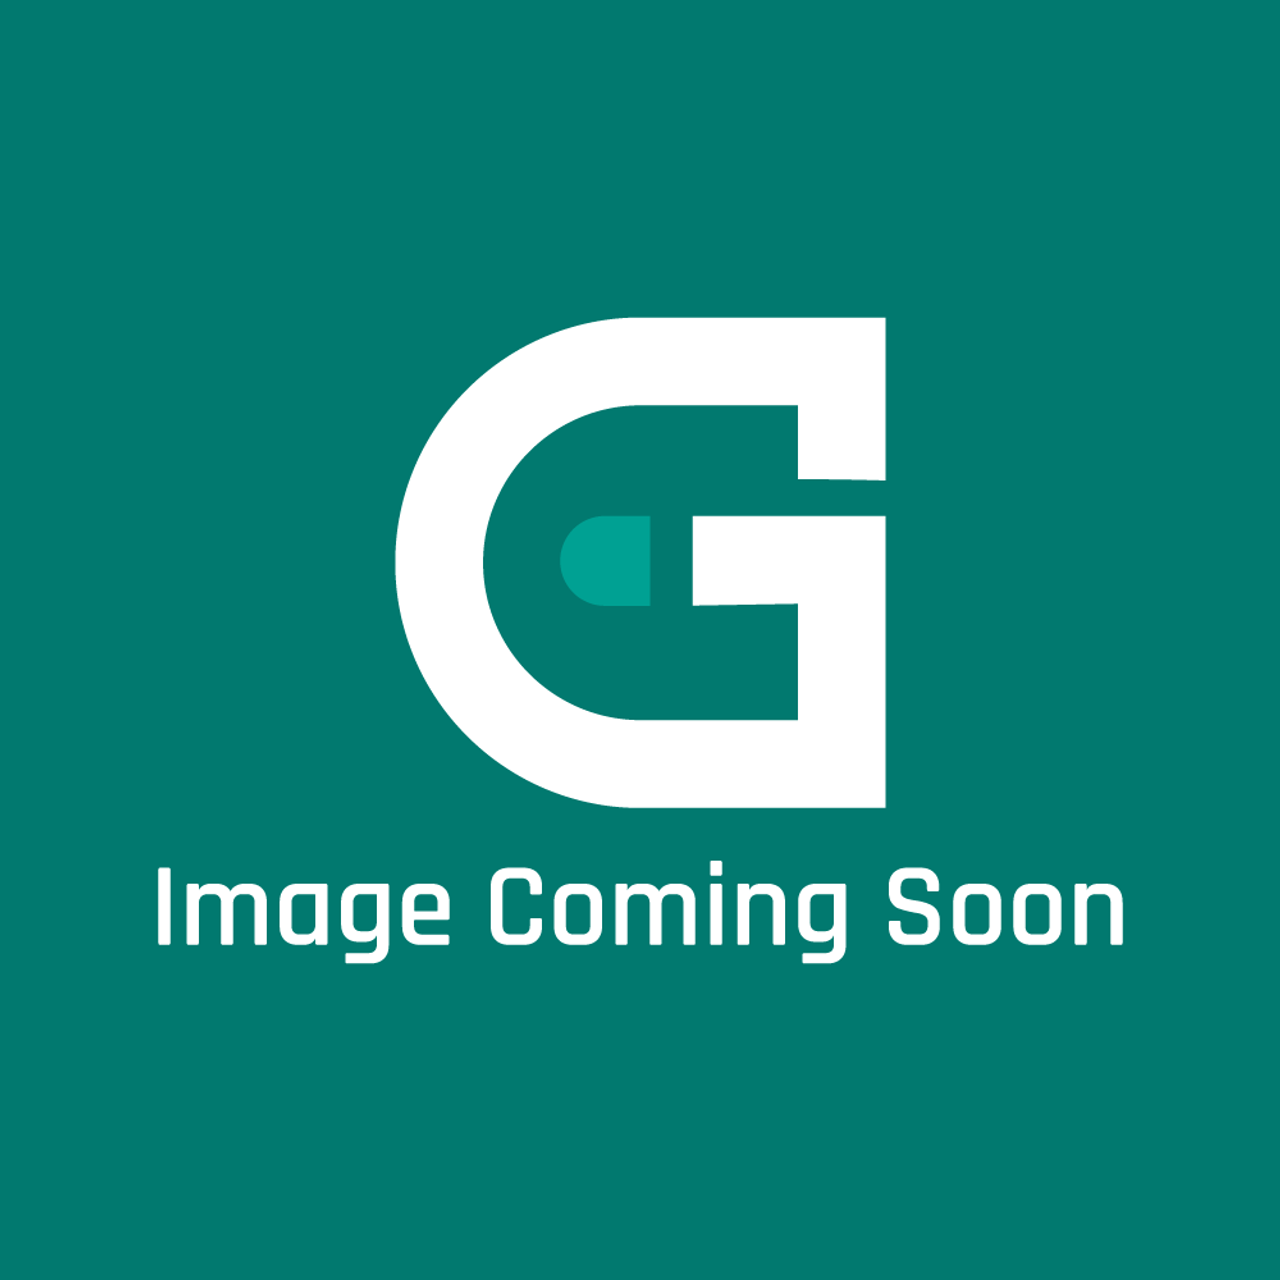 GE Appliances WR02X12015 - Cap-Chute Ice - Image Coming Soon!